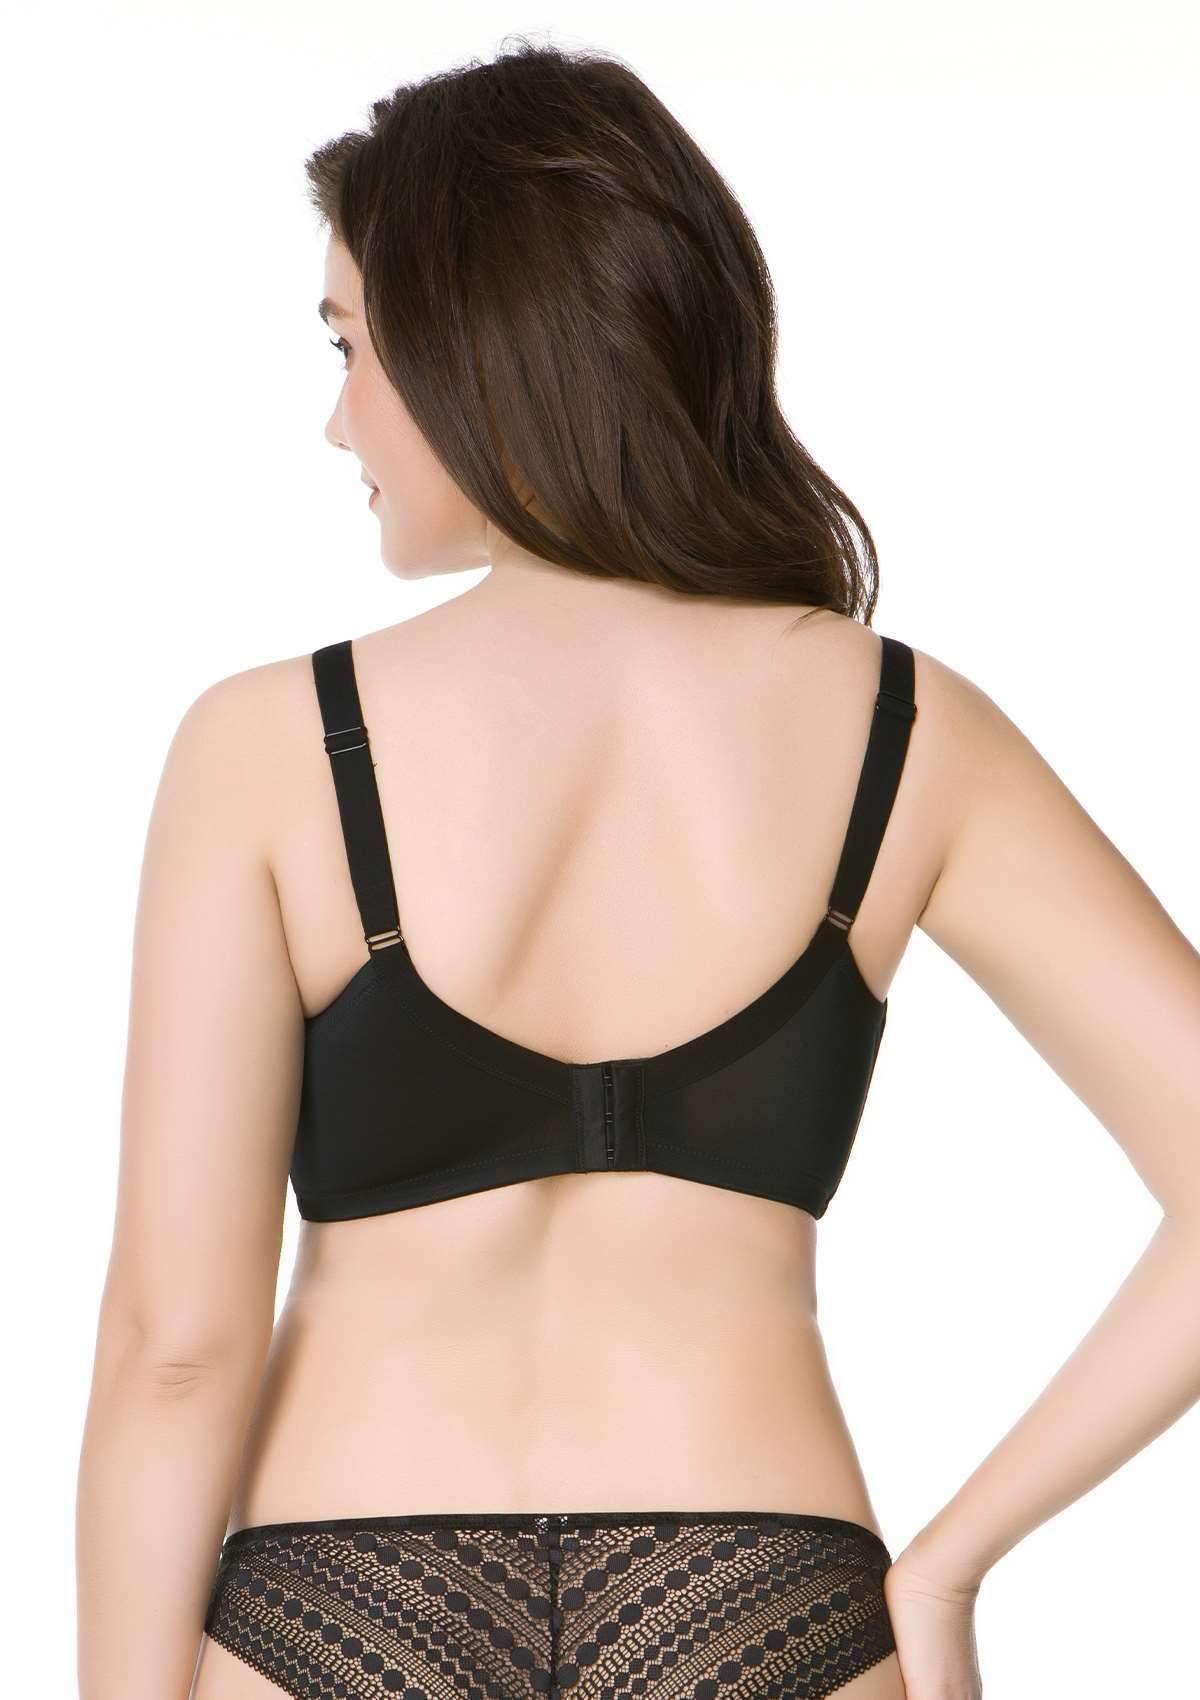 HSIA Heroine Matching Bra And Panties: Unlined Lace Unpadded Bra - Black / 38 / C